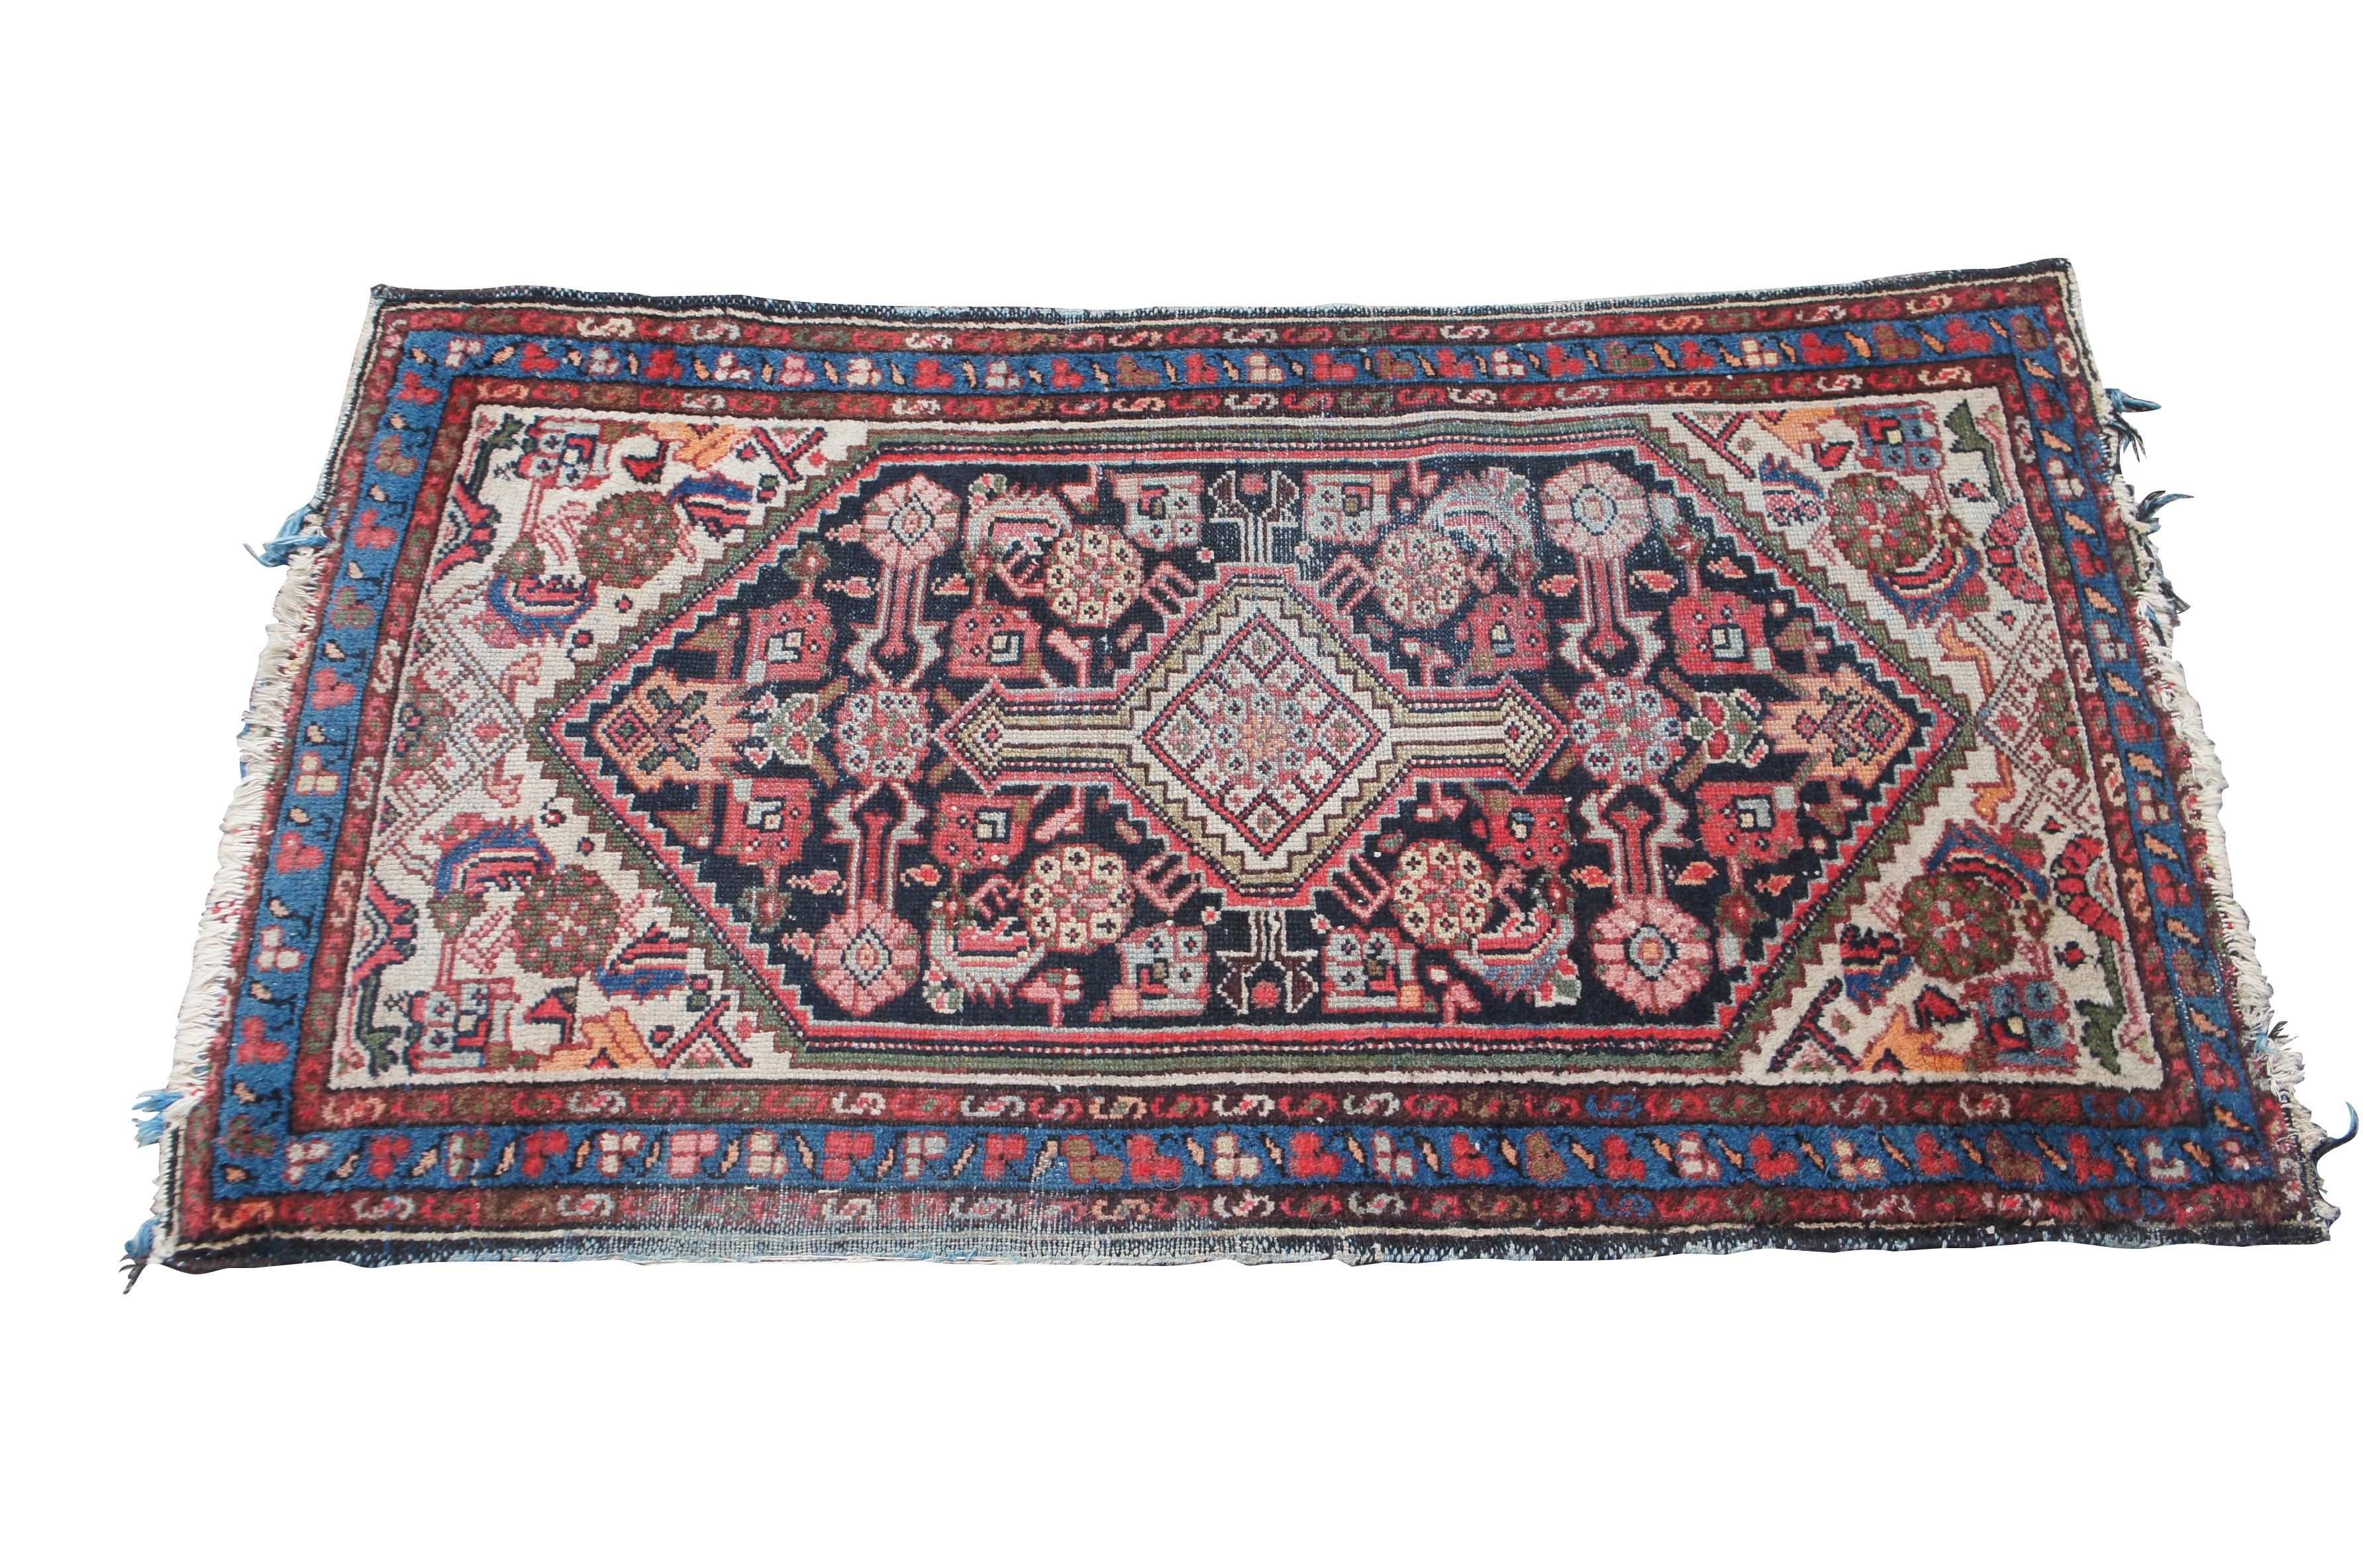 Islamic Hand Woven Persian Kurdish Geometric Red & Blue Wool Area Rug Prayer Mat 3 x 4' For Sale